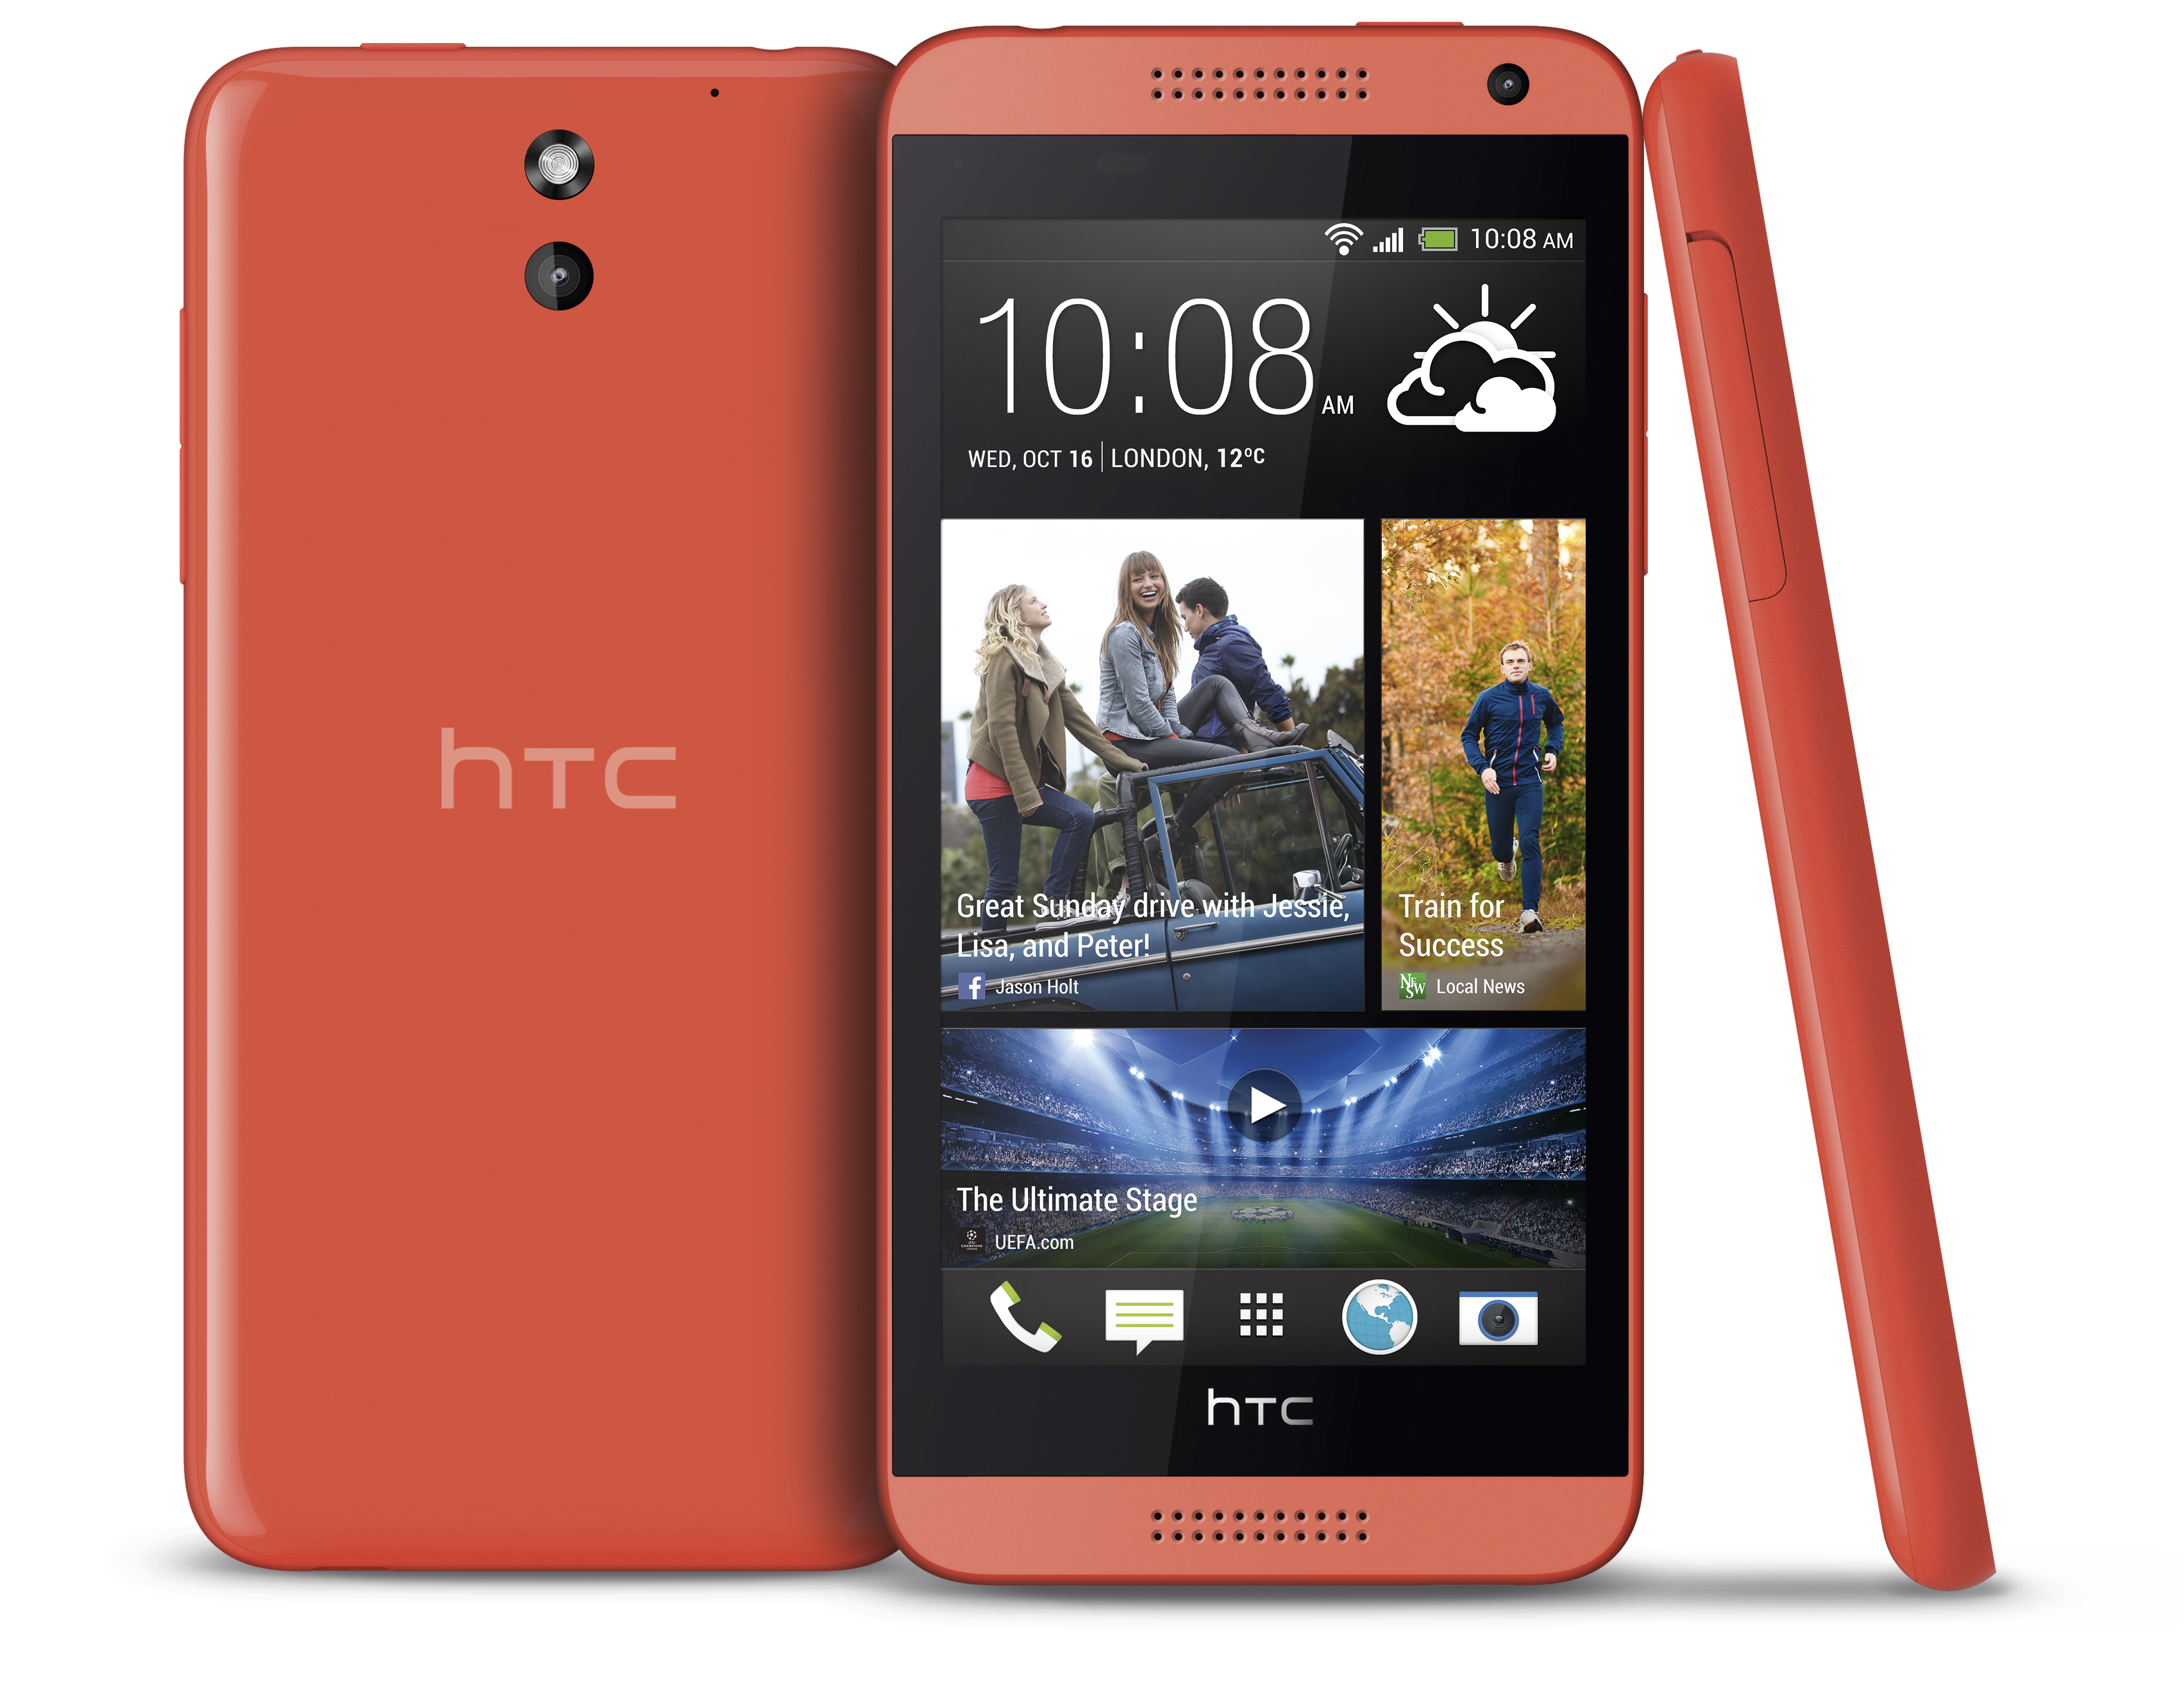 HTC Desire 610 smartphone